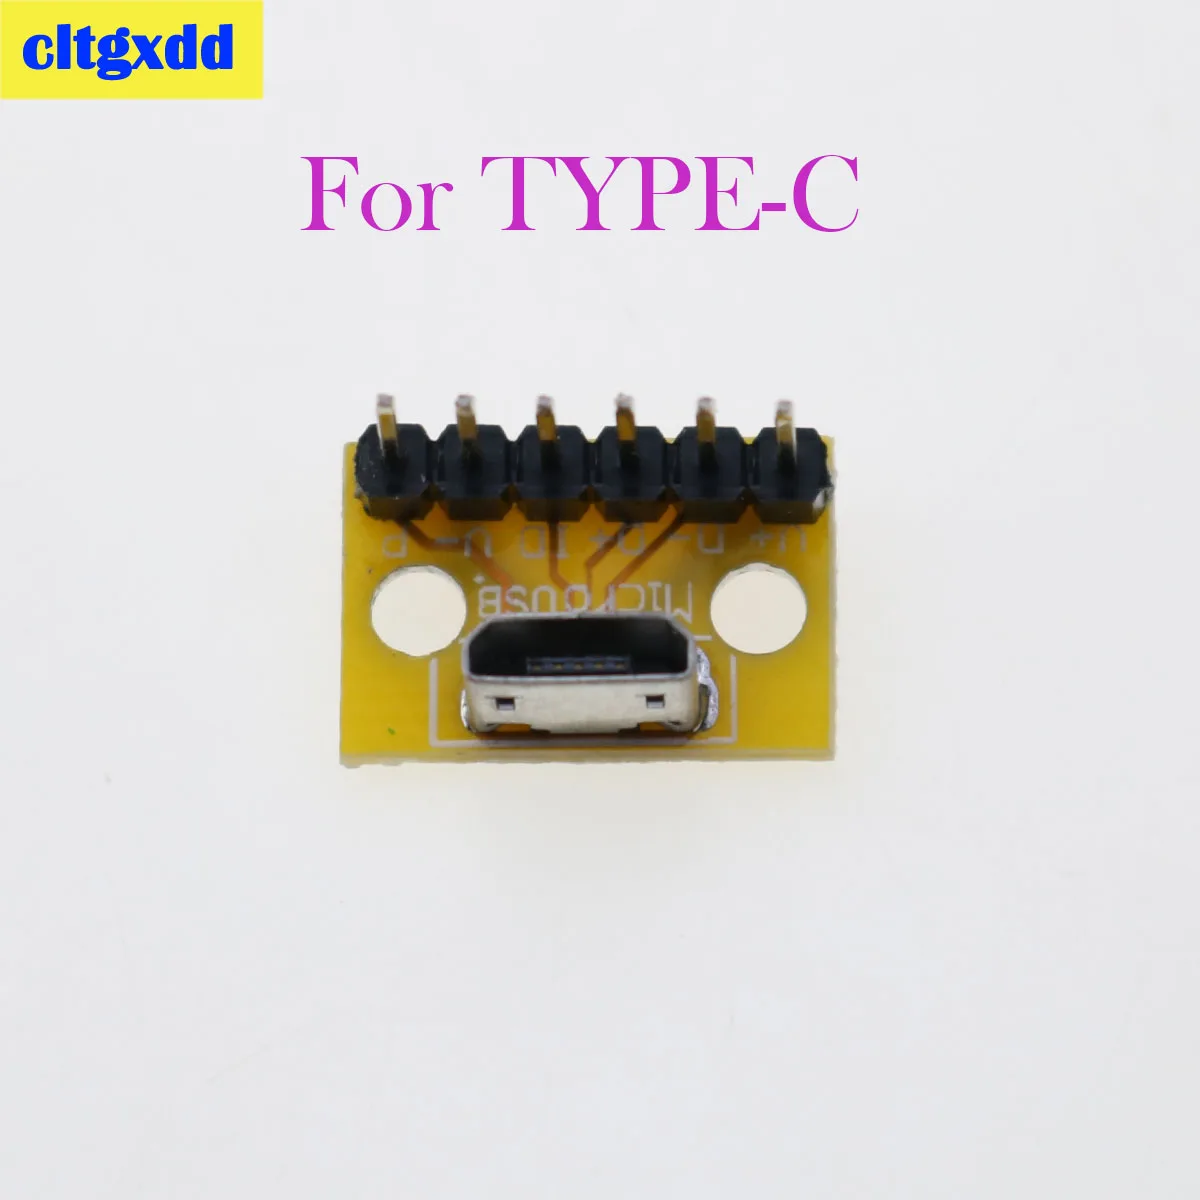 Cltgxdd-Conector de cabeza hembra, Adaptador convertidor PCB, placa de prueba de rotura,...